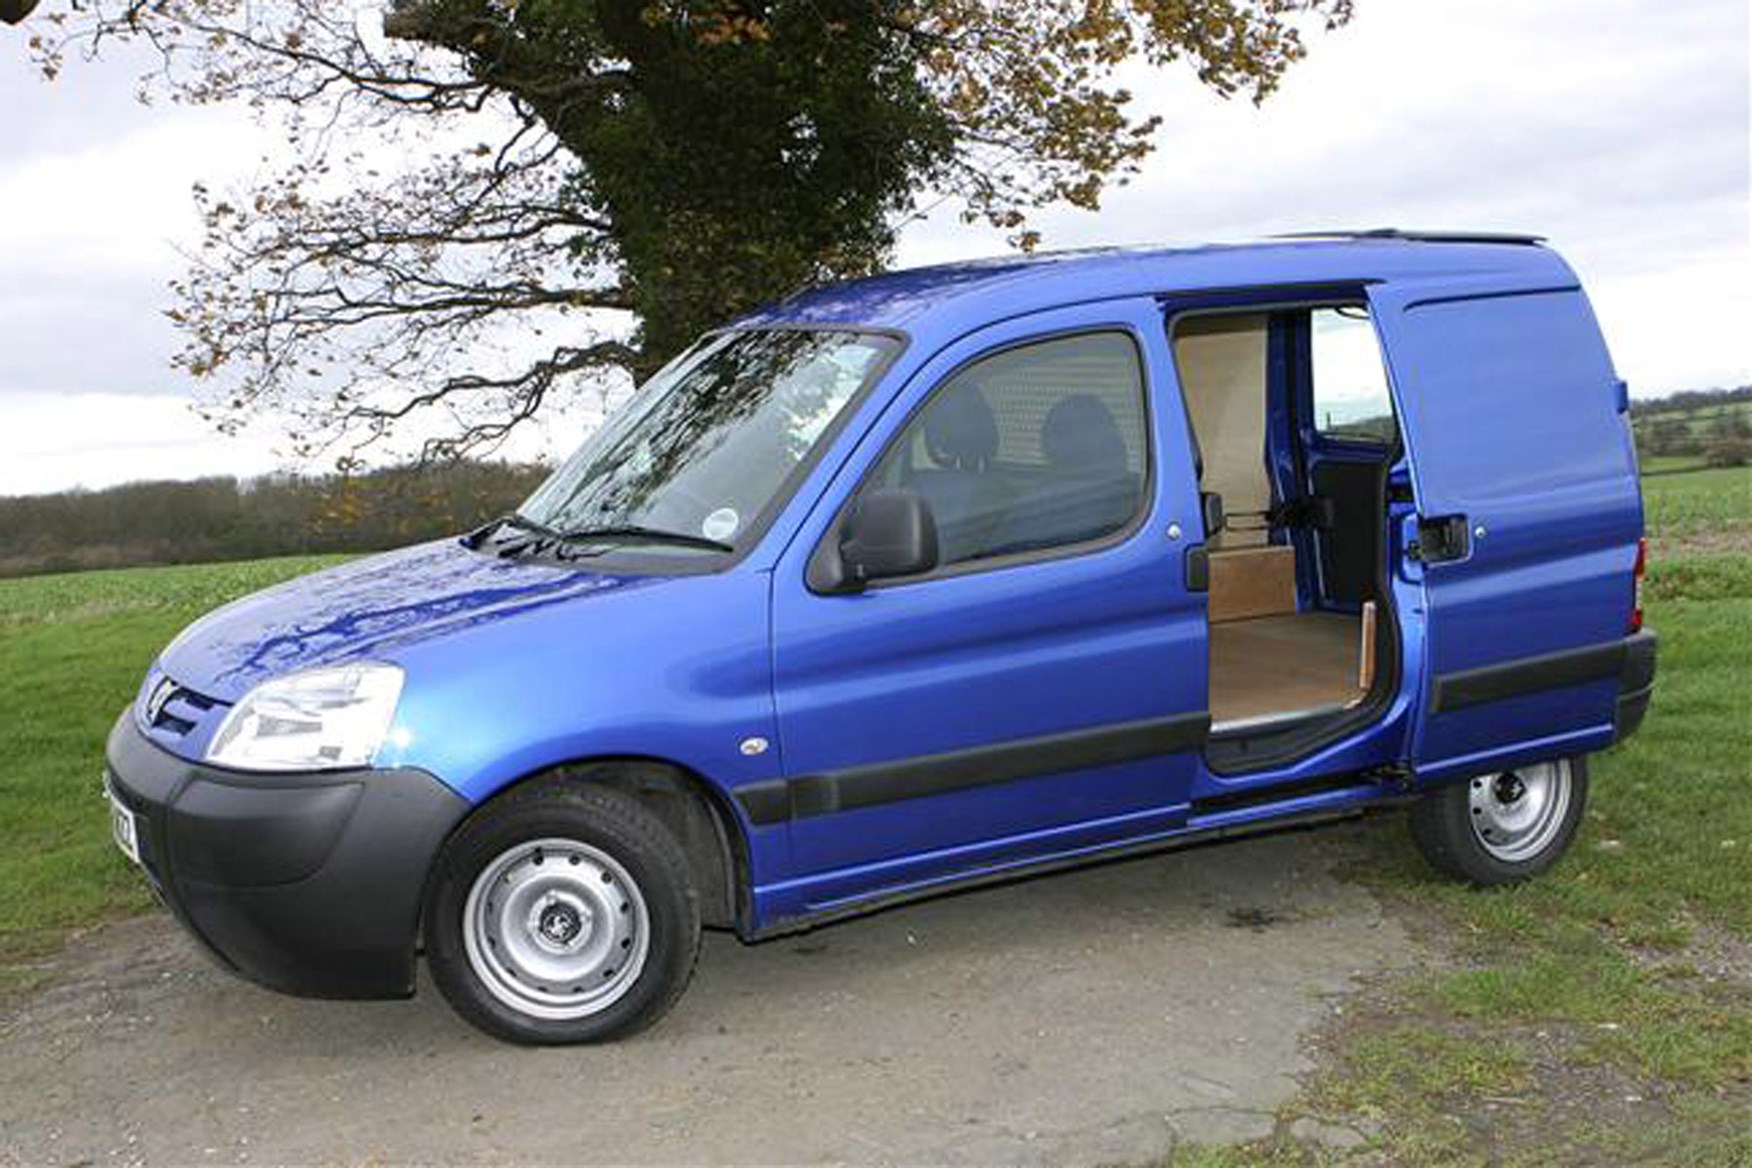 Peugeot Partner review on Parkers Vans -load area access